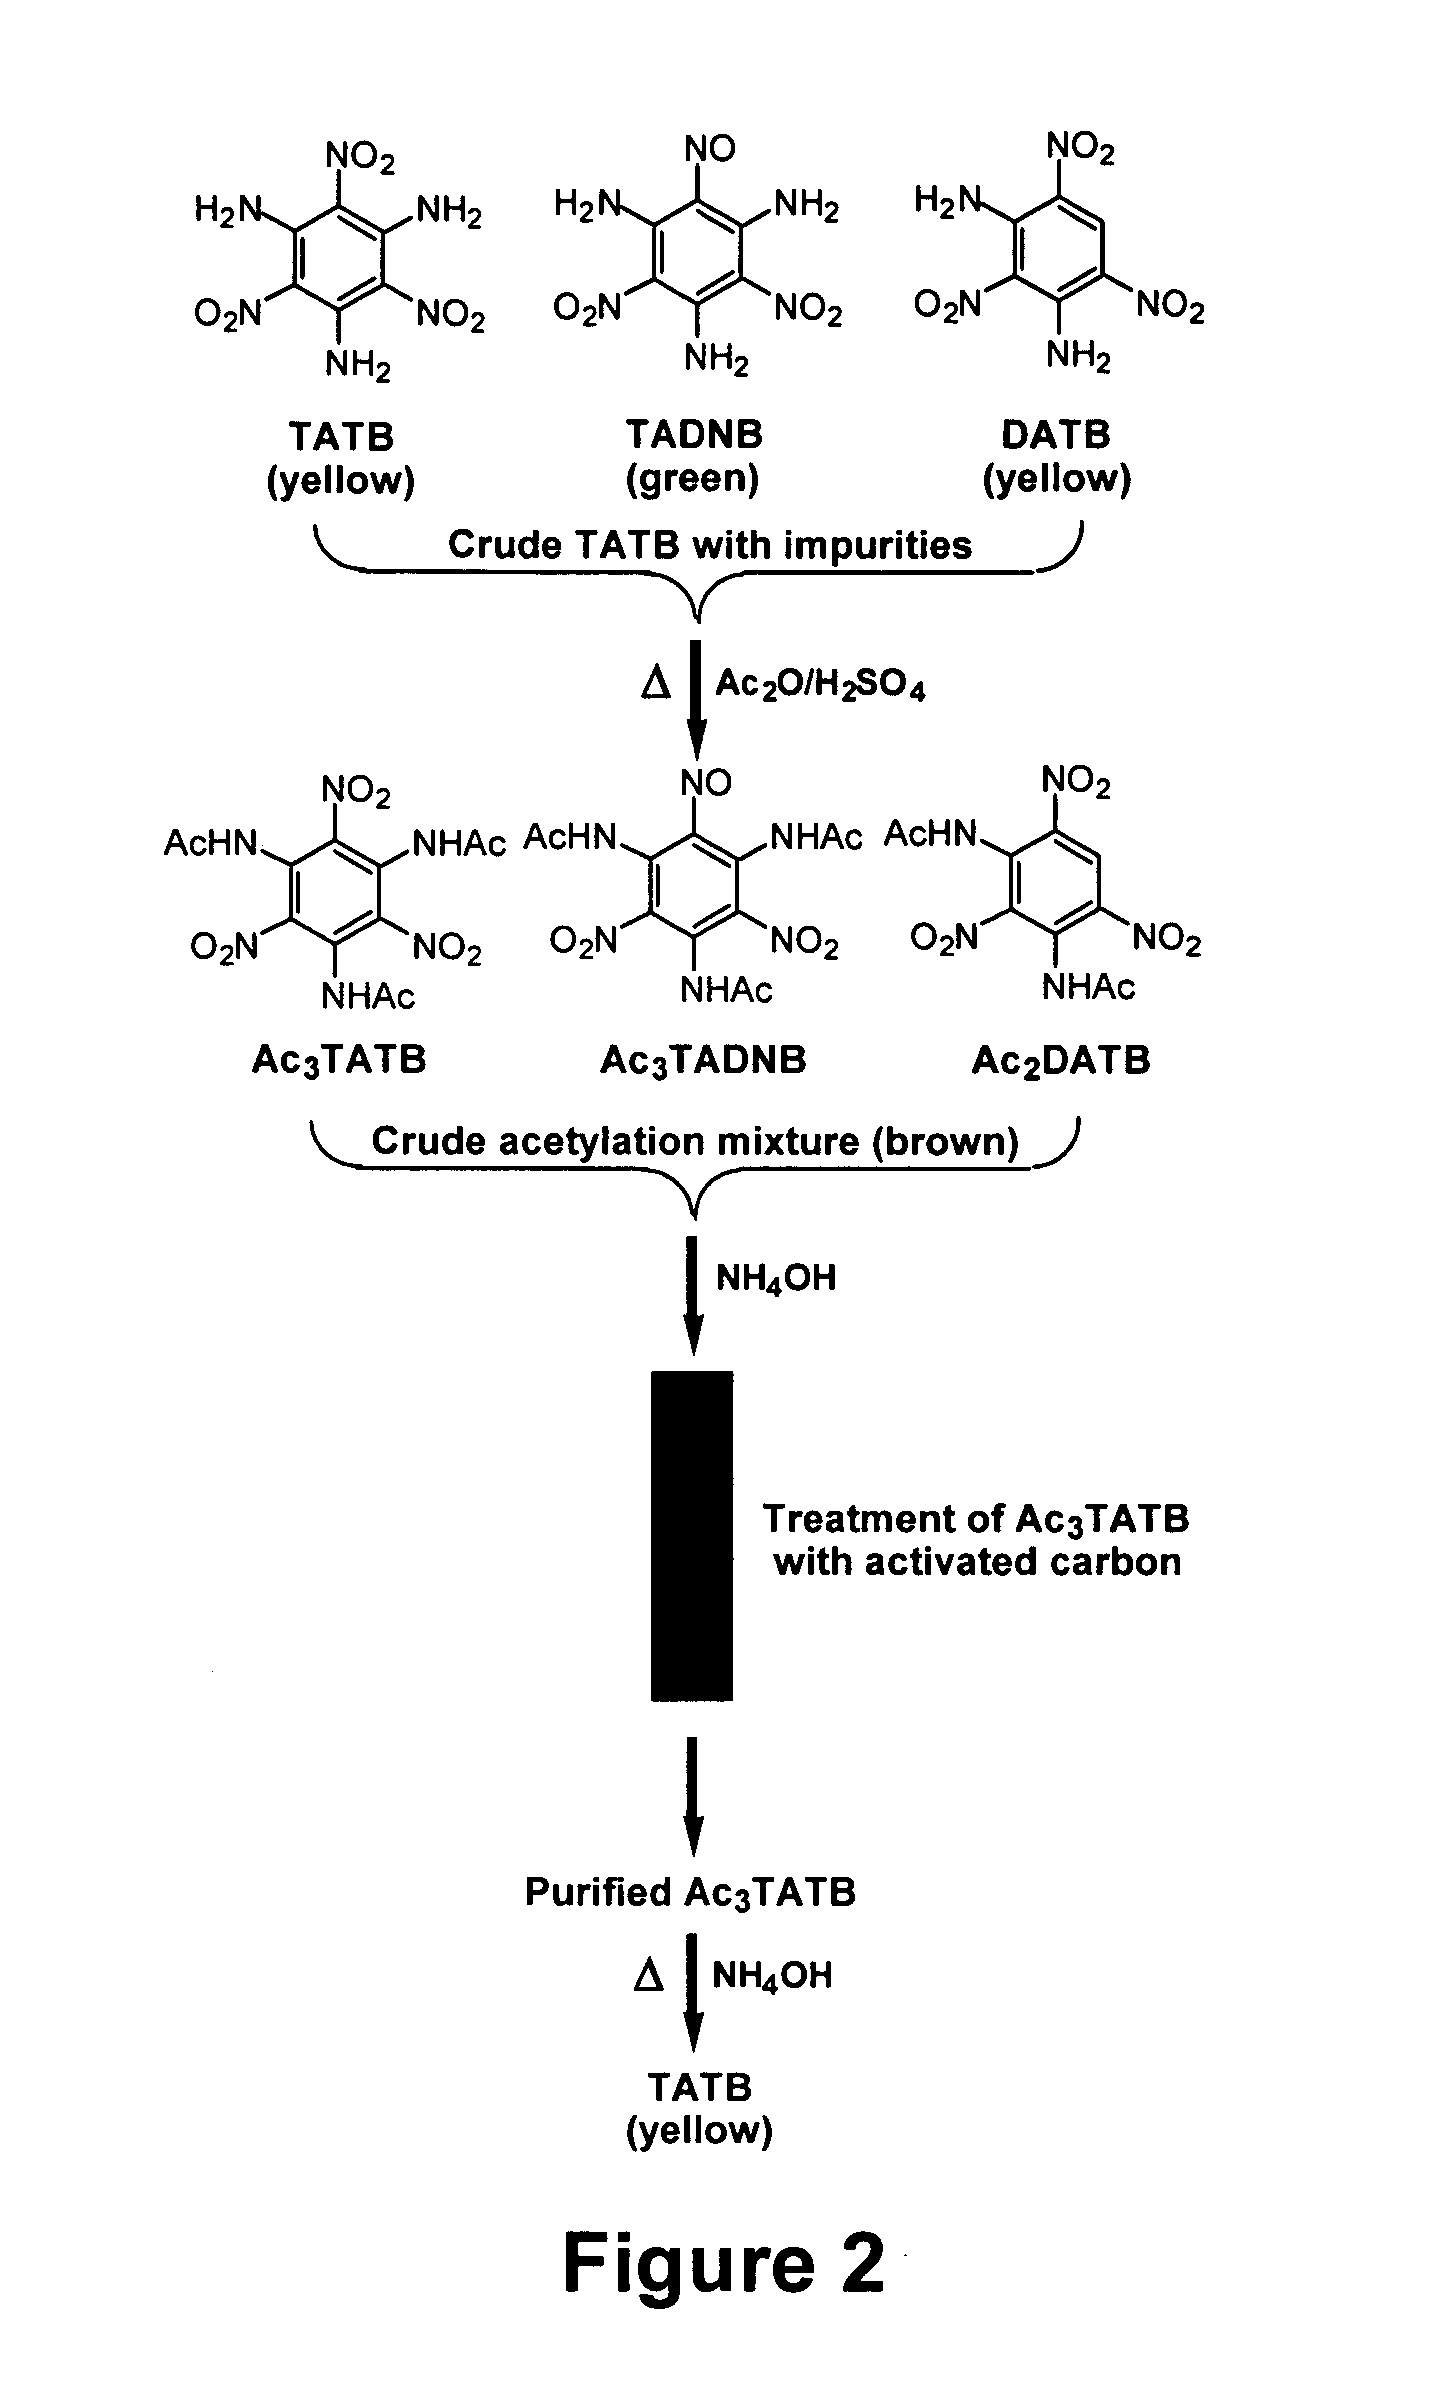 Synthesis and purification of 1,3,5-triamino-2,4,6-trinitrobenzene (TATB)